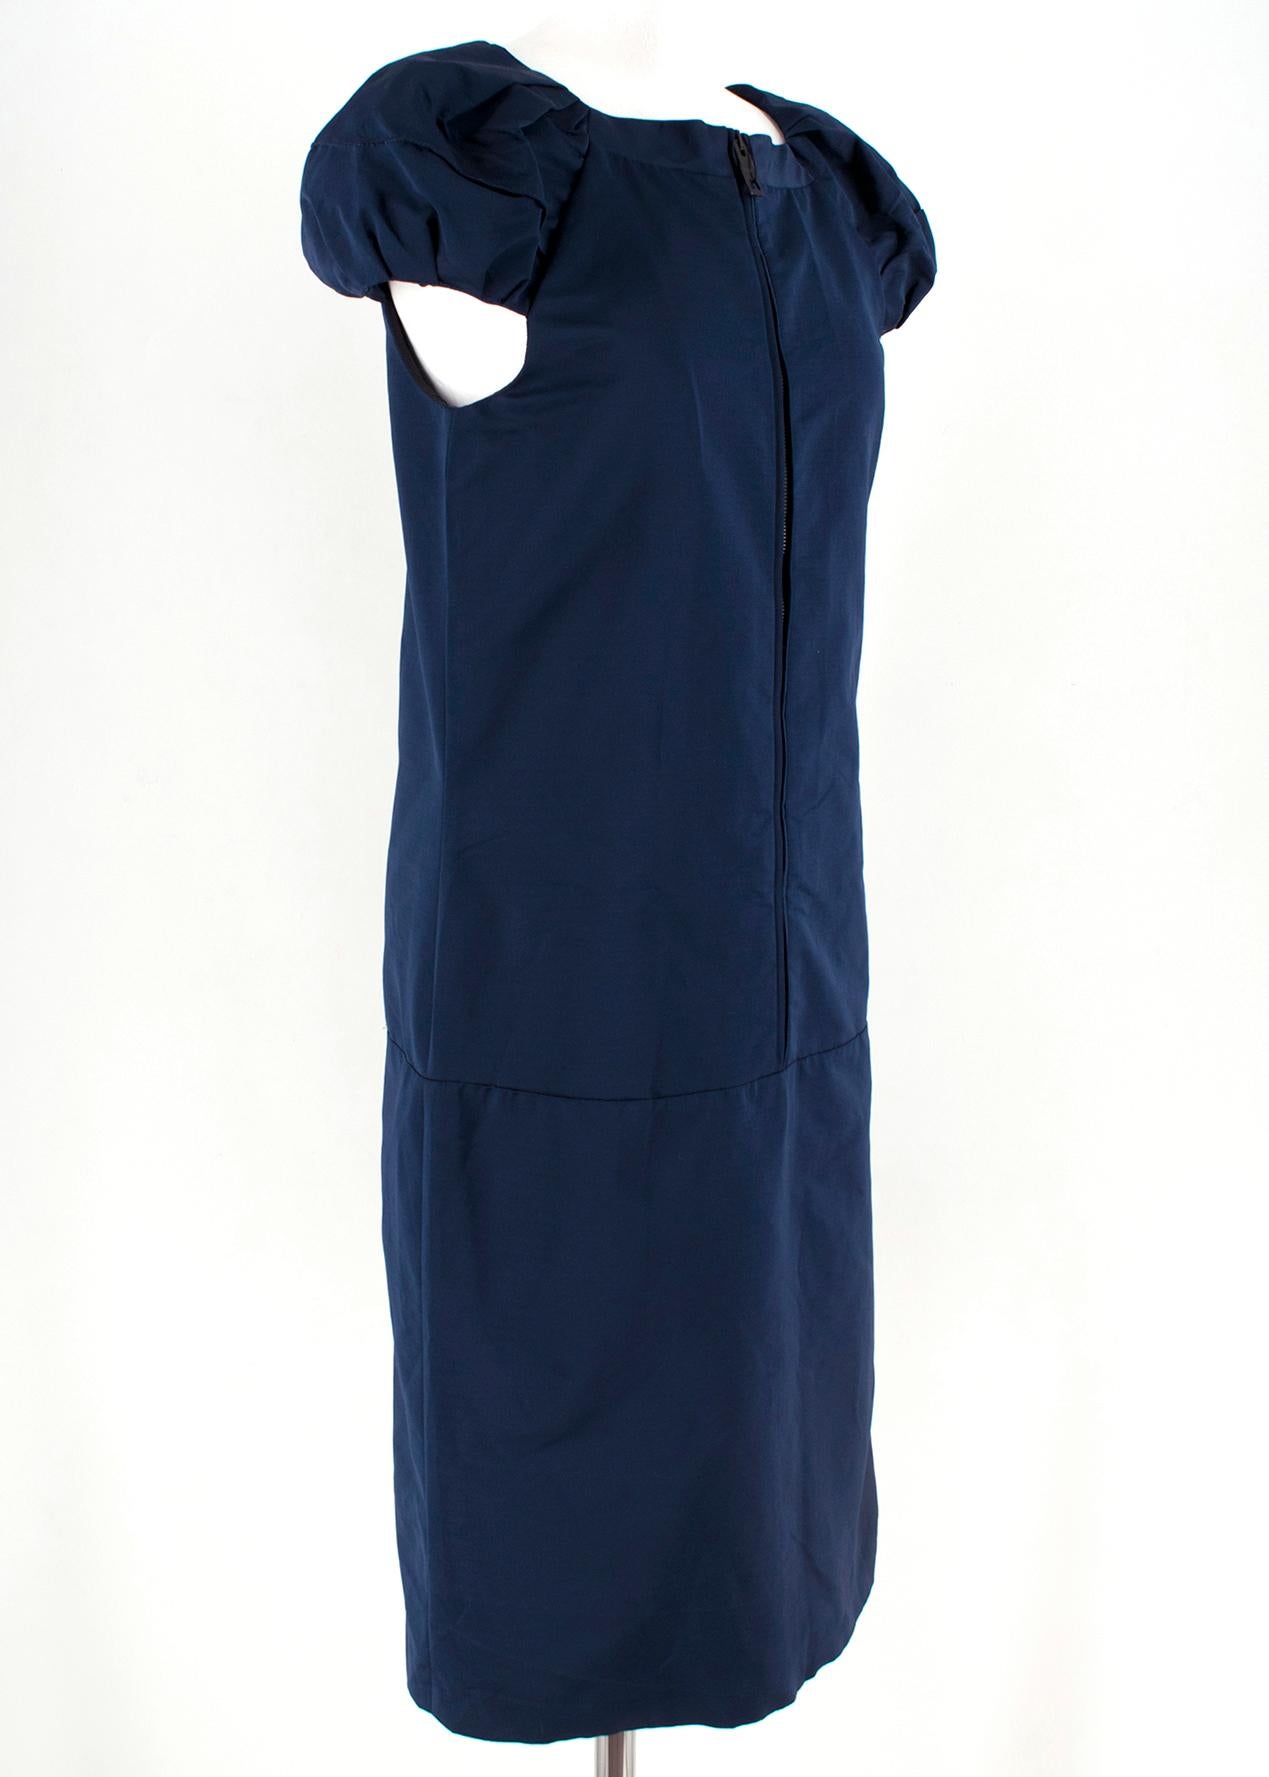 Burberry Prorsum Dark Blue Puff Sleeve Dress - Size Medium For Sale 1